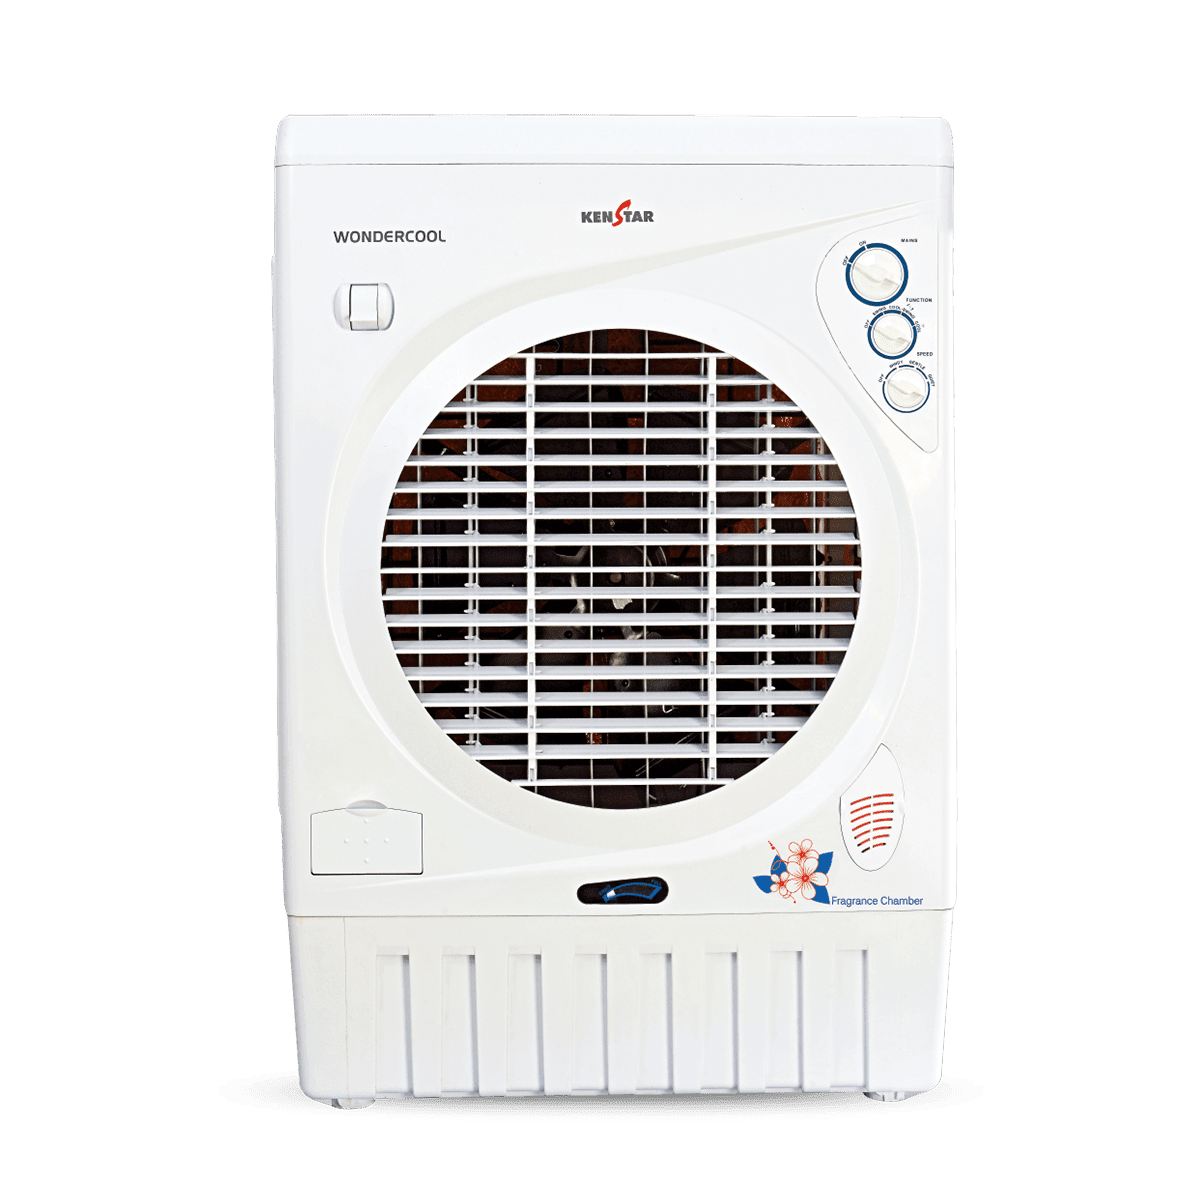 Kenstar Wondercool 40 L DX Air Cooler On Dillimall.Com